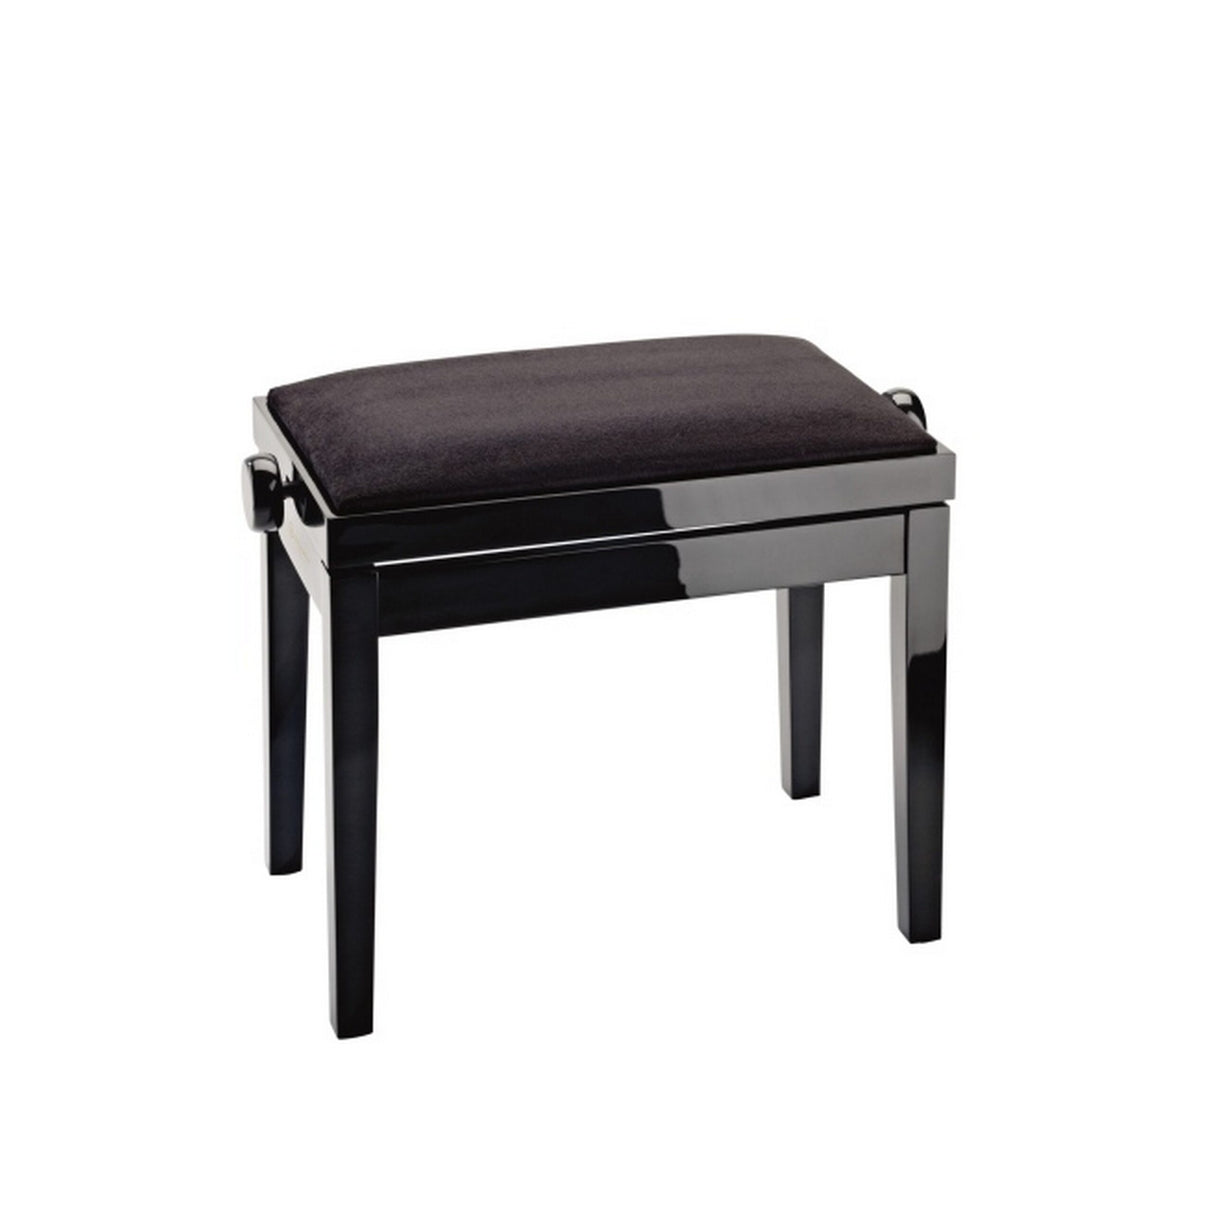 K&M 13901 Piano Bench, Black Glossy Finish Bench, Black Velvet Seat